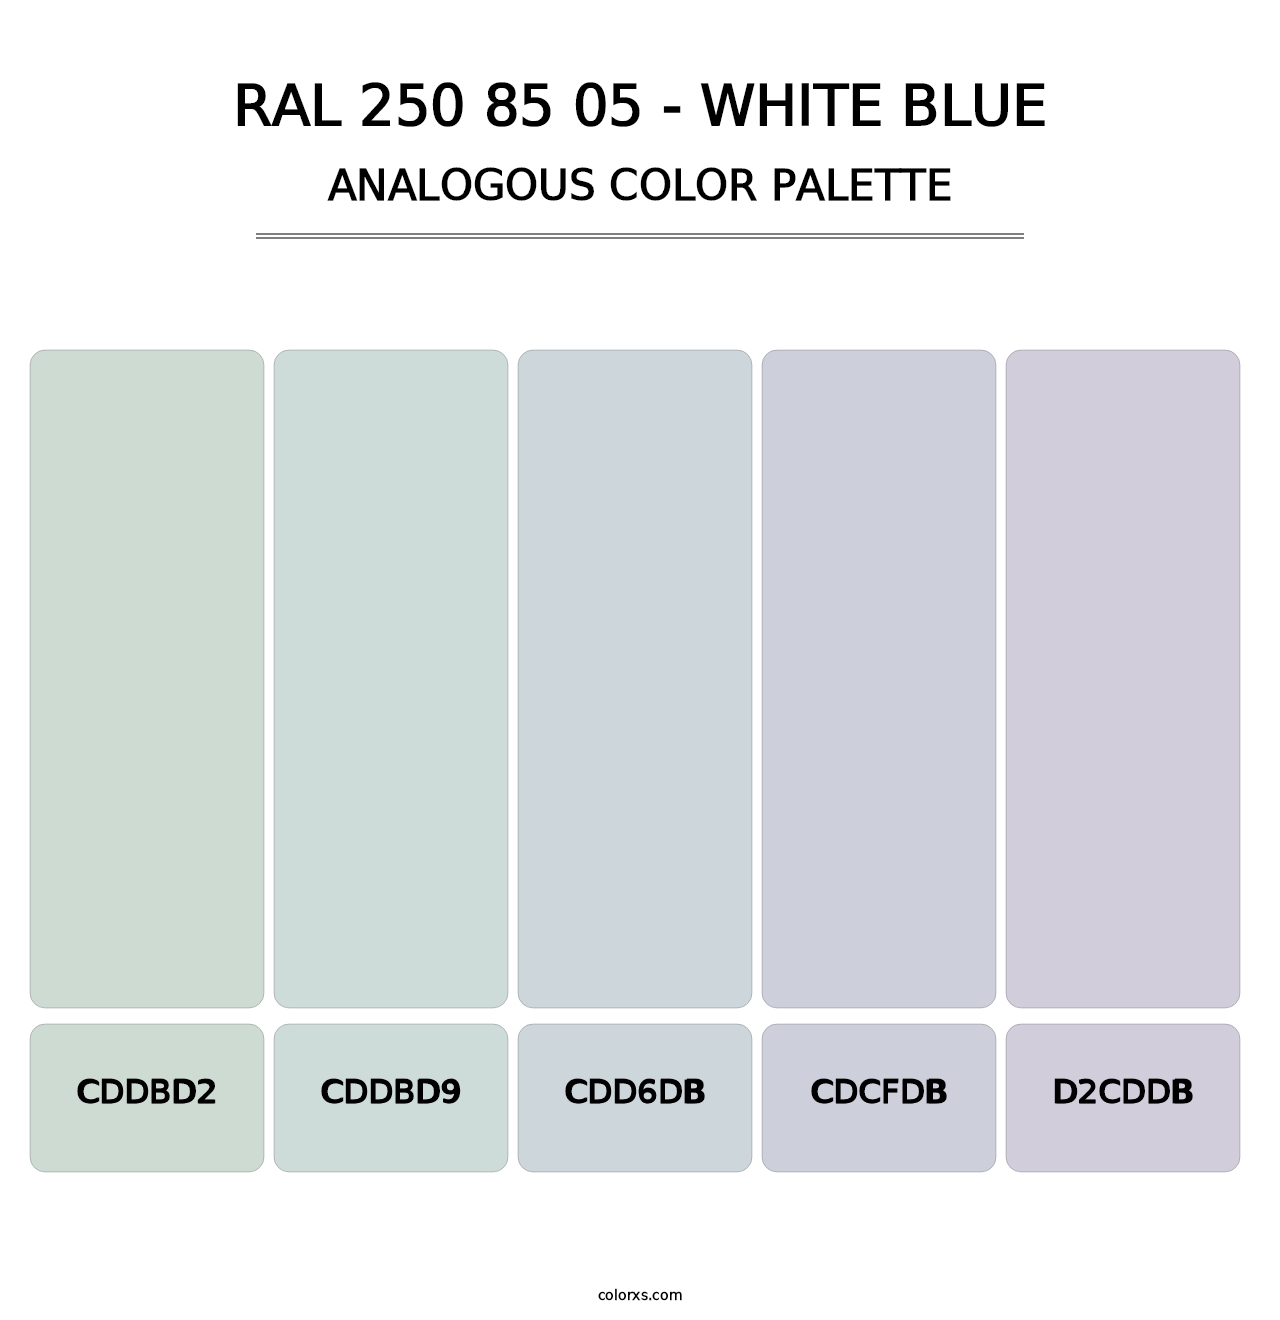 RAL 250 85 05 - White Blue - Analogous Color Palette